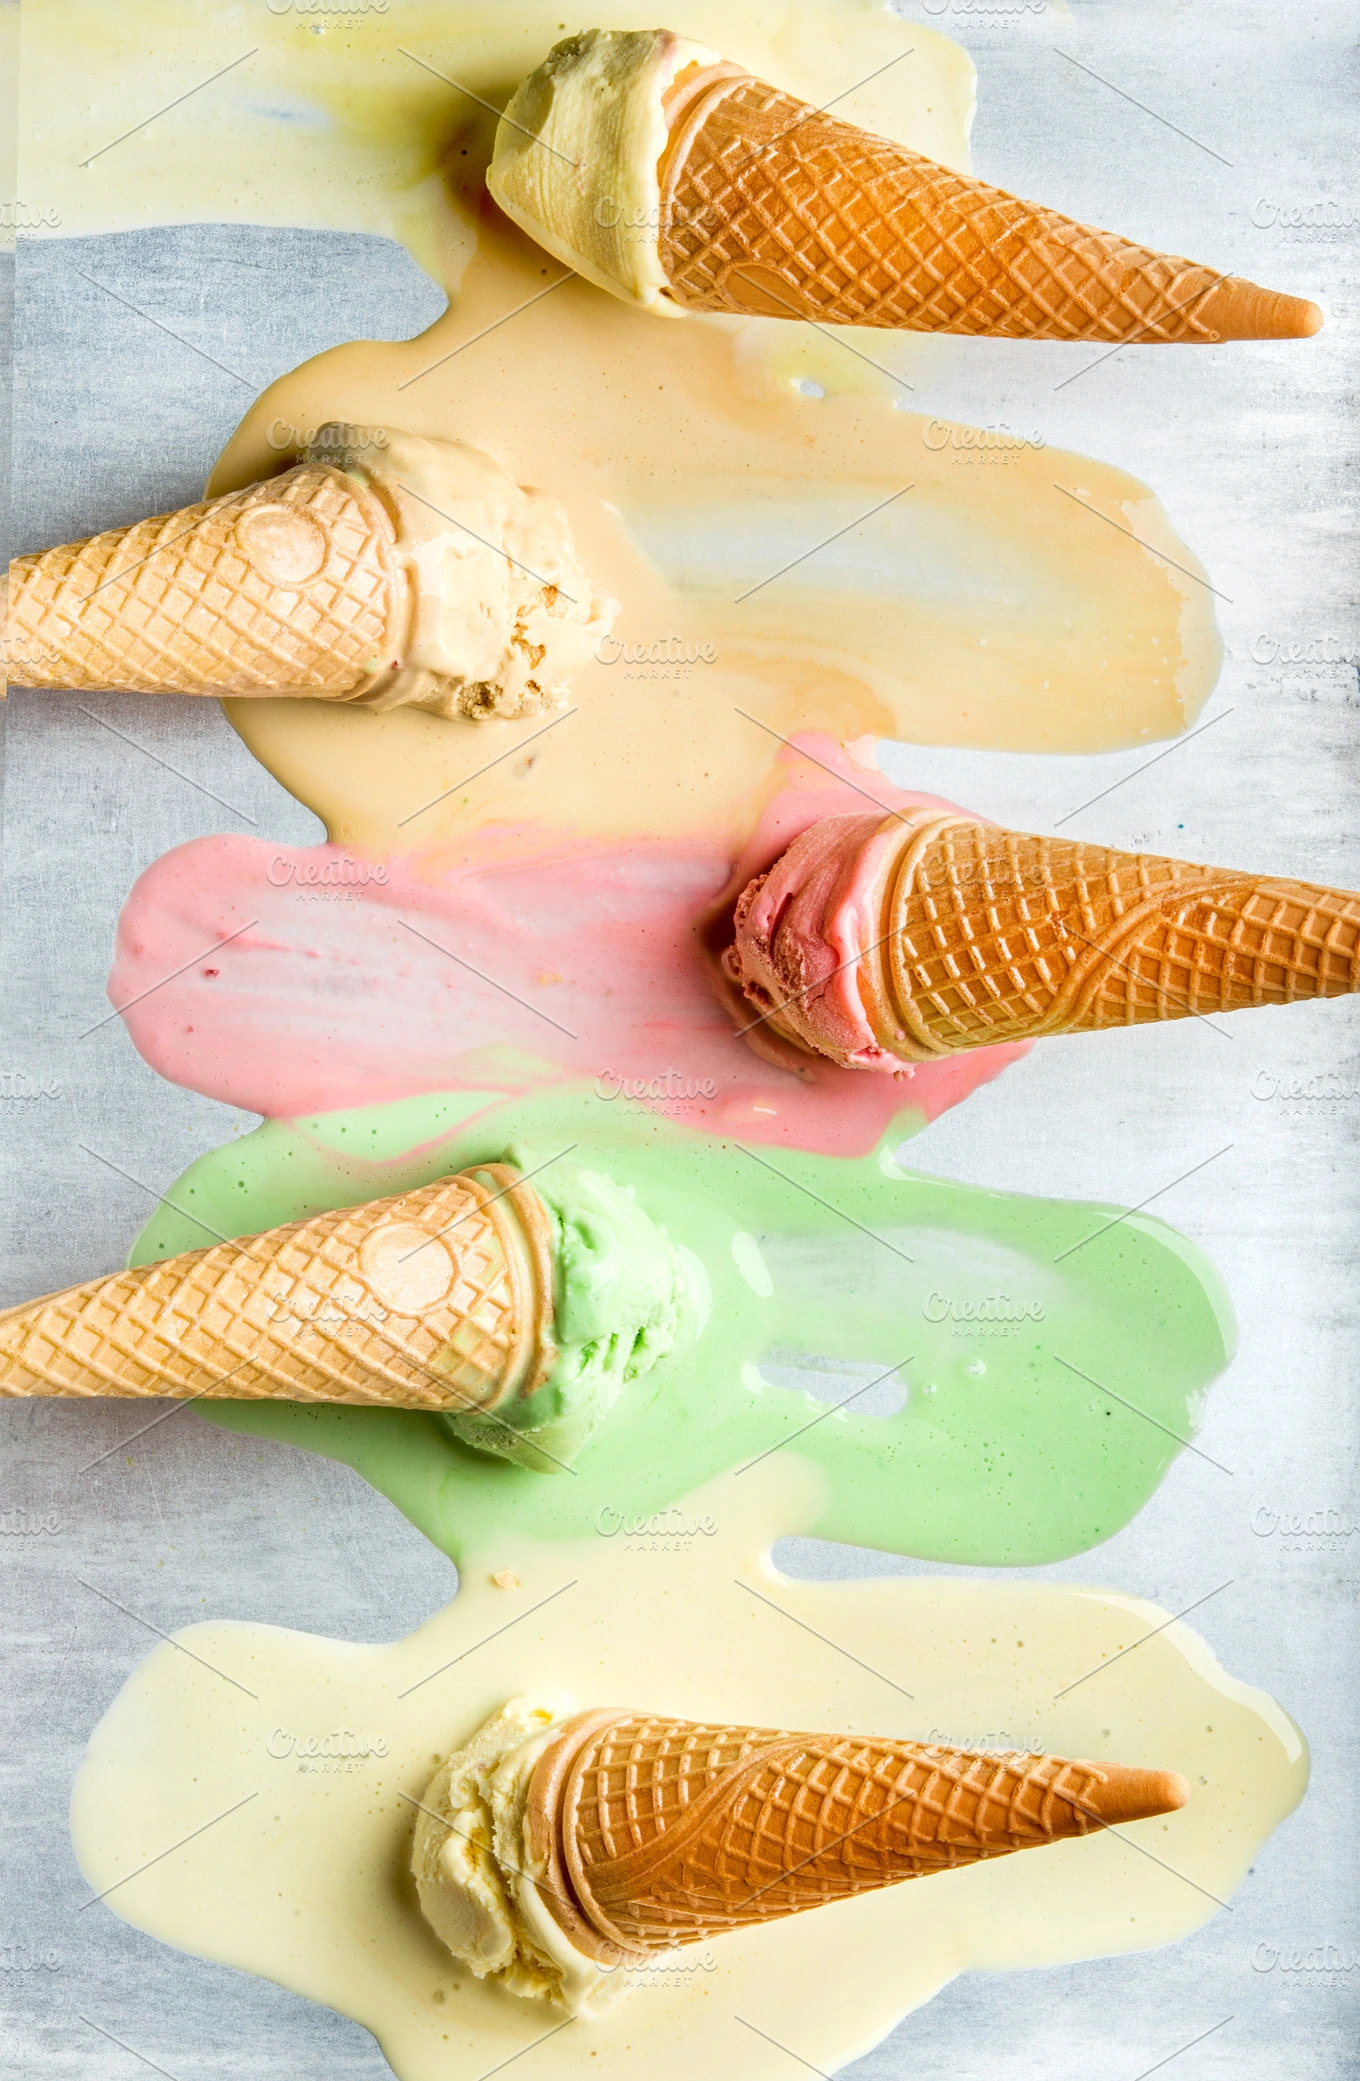 Colorful ice cream cones ~ Food Images ~ Creative Market